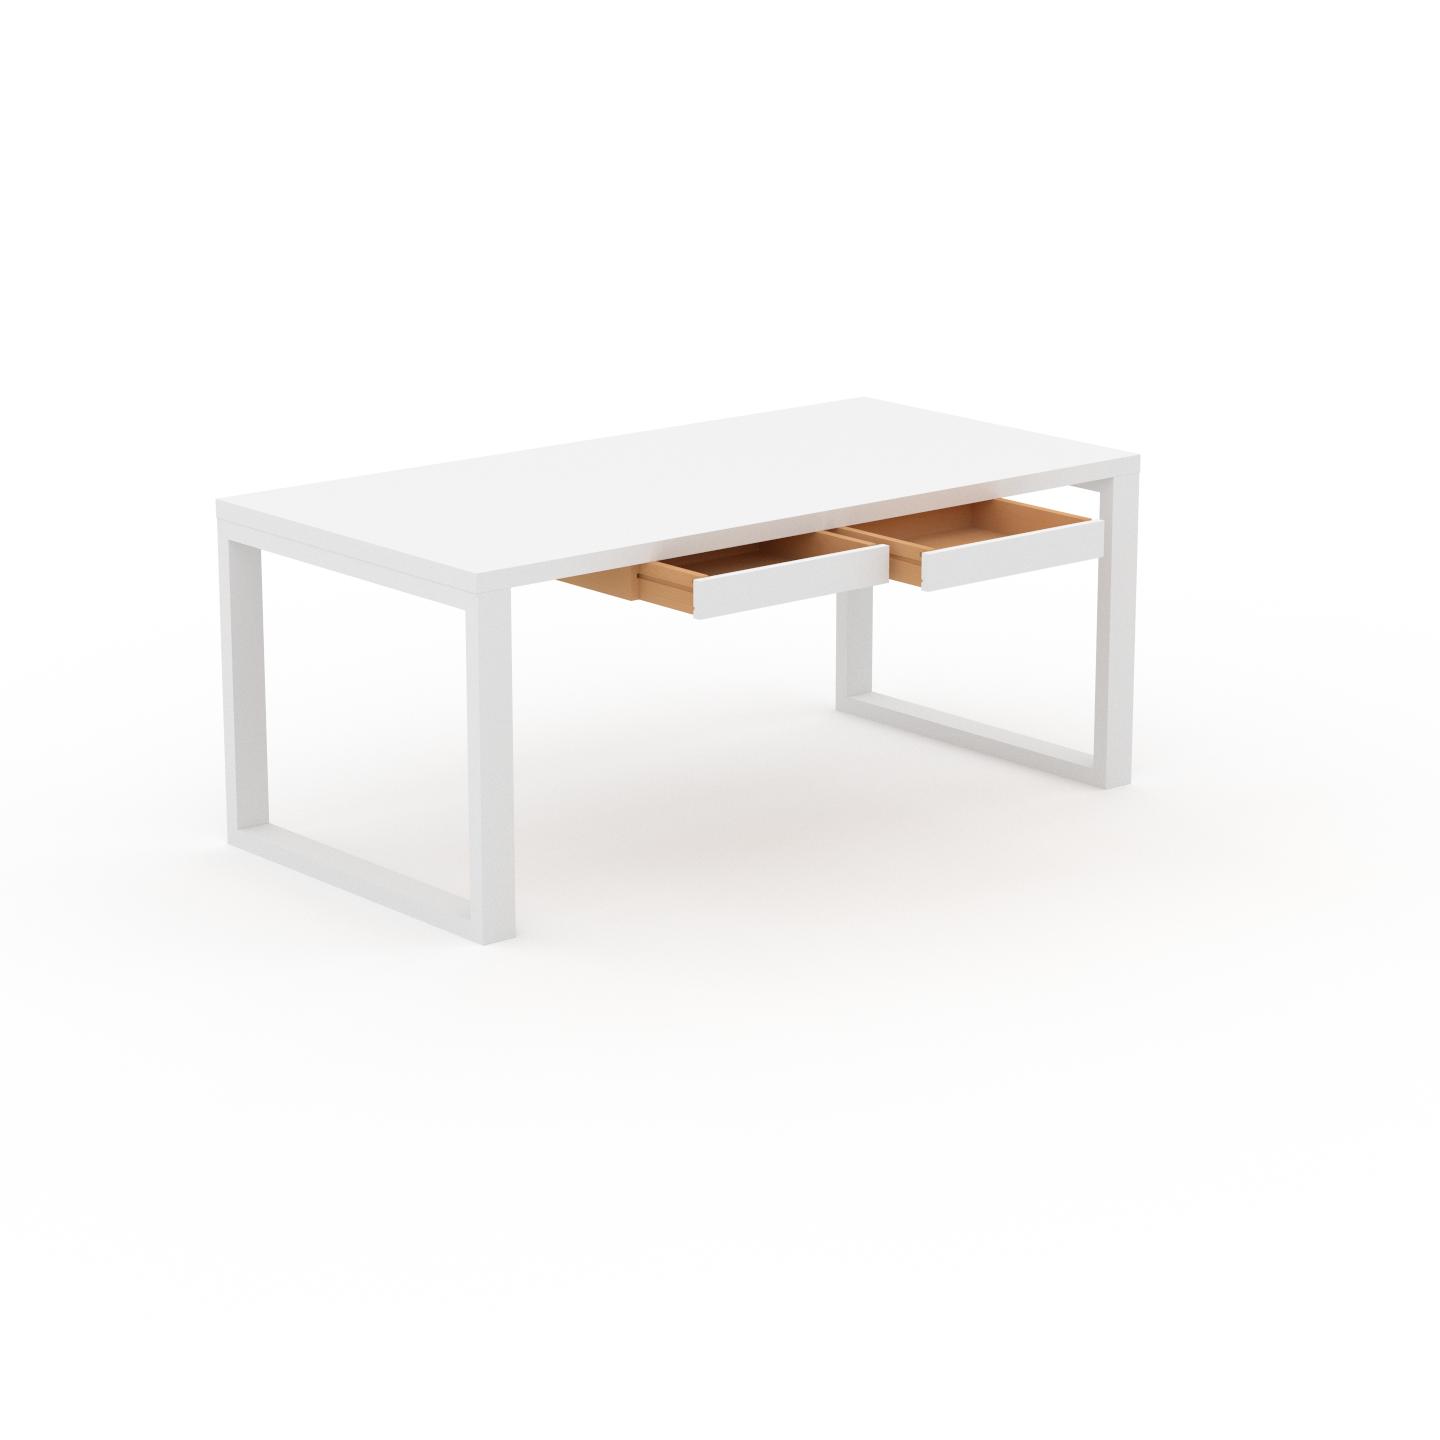 MYCS Schreibtisch Massivholz Weiß - Moderner Massivholz-Schreibtisch: mit 2 Schublade/n - Hochwertige Materialien - 180 x 75 x 90 cm, konfigurierbar